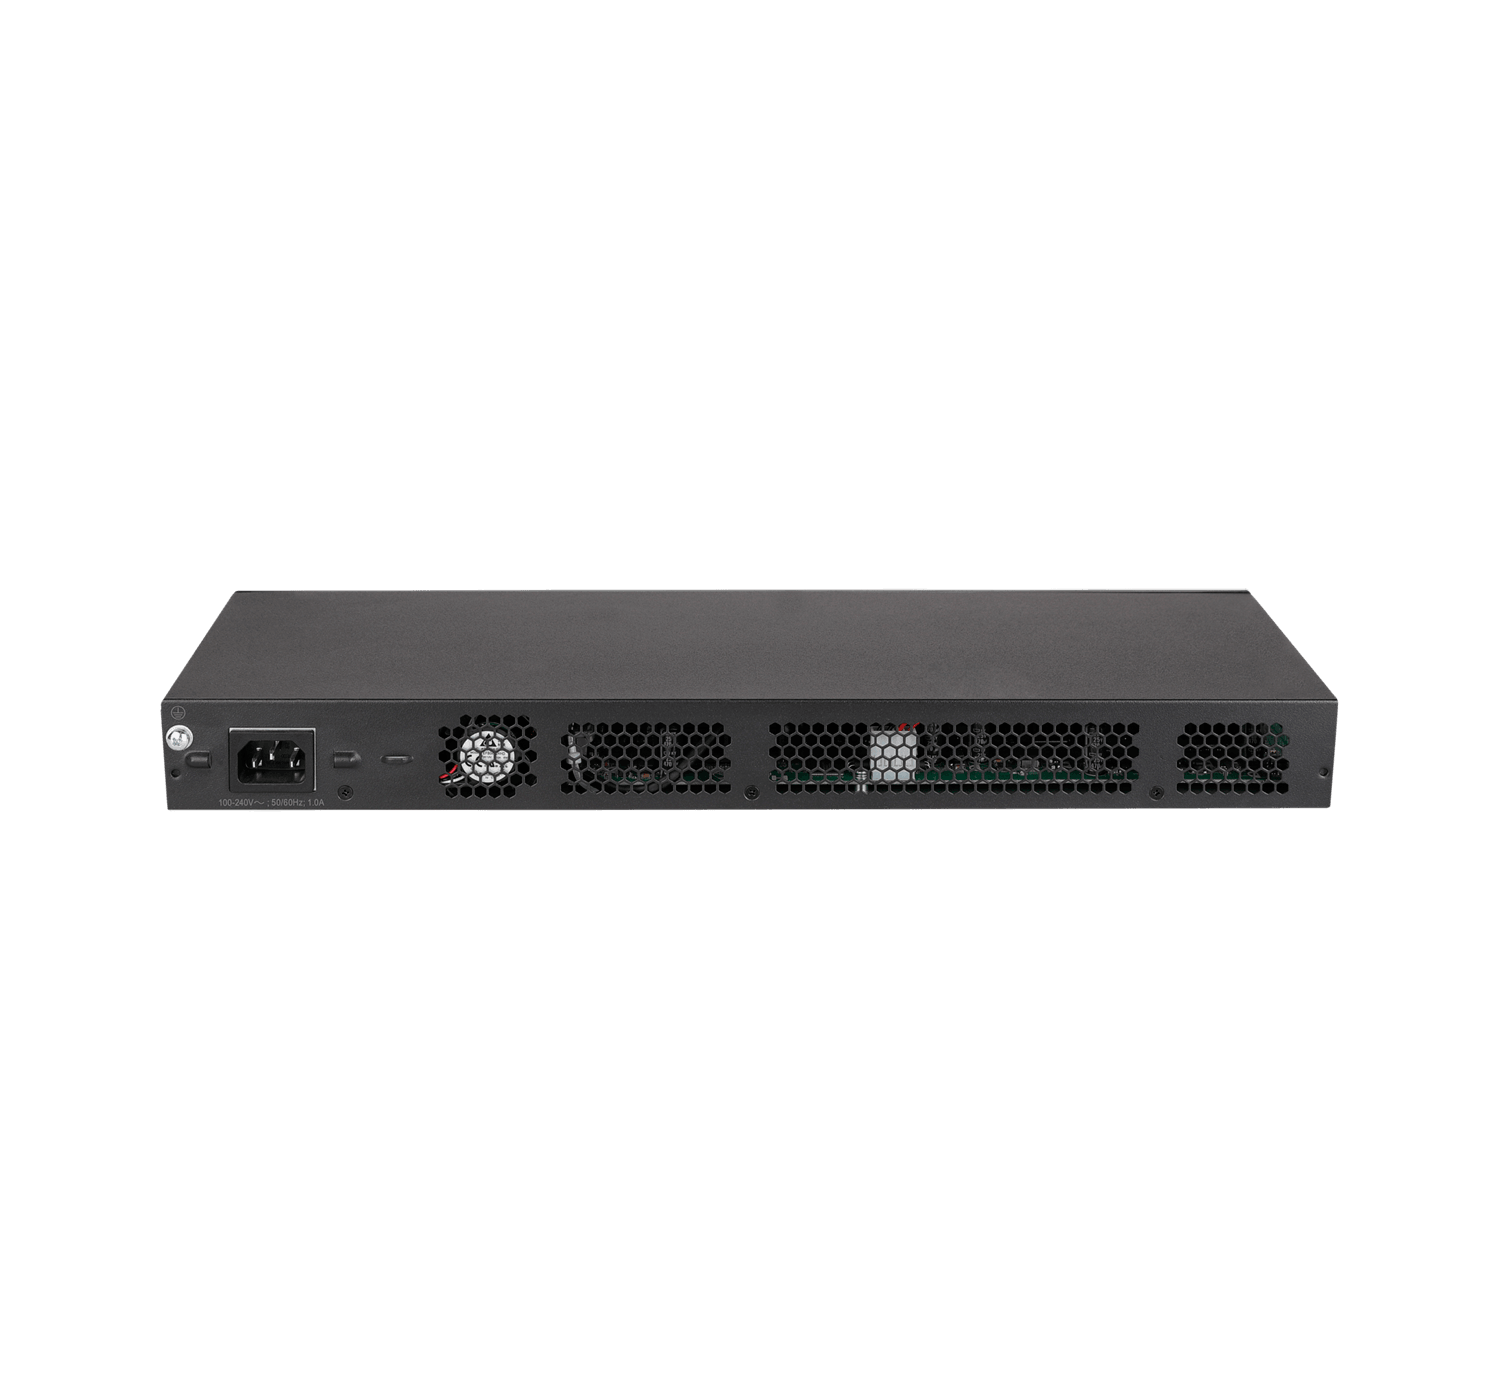 (NEW VENDOR) HPE JL828A HPE 5140 24G 4SFP+ EI Switch - C2 Computer